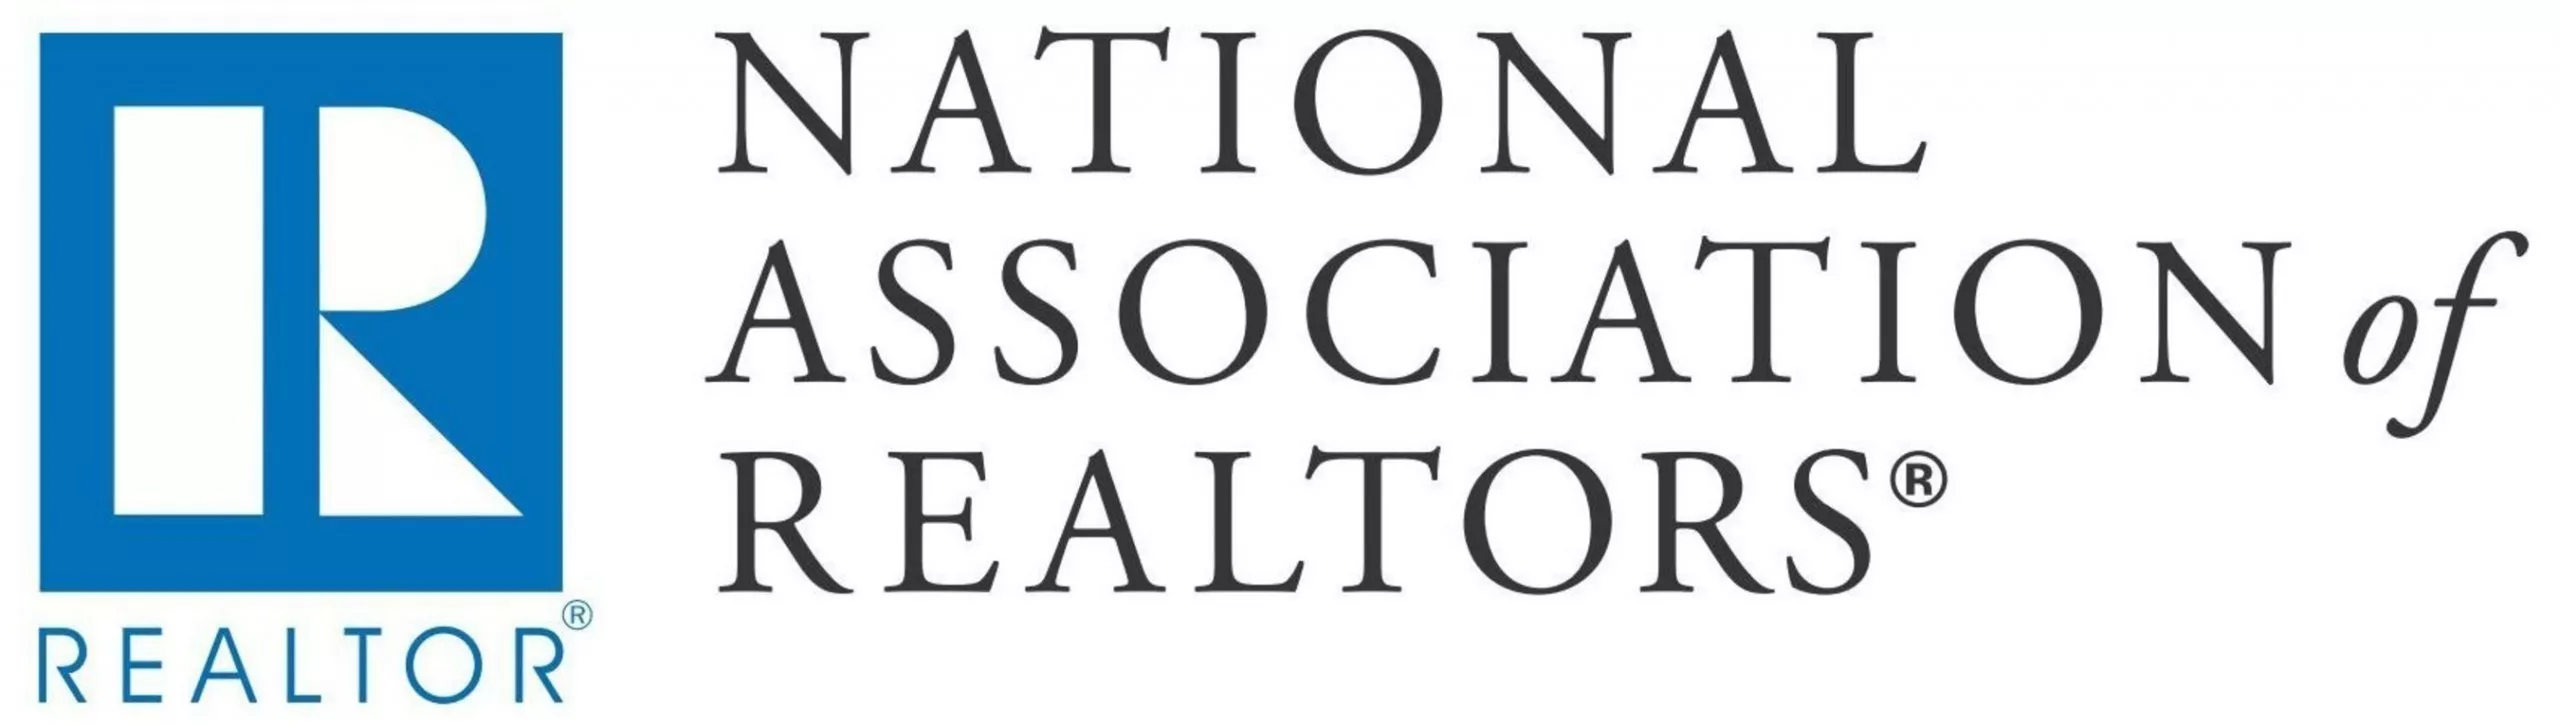 National Association of Realtors logo (PRNewsFoto/National Association of Realtors)